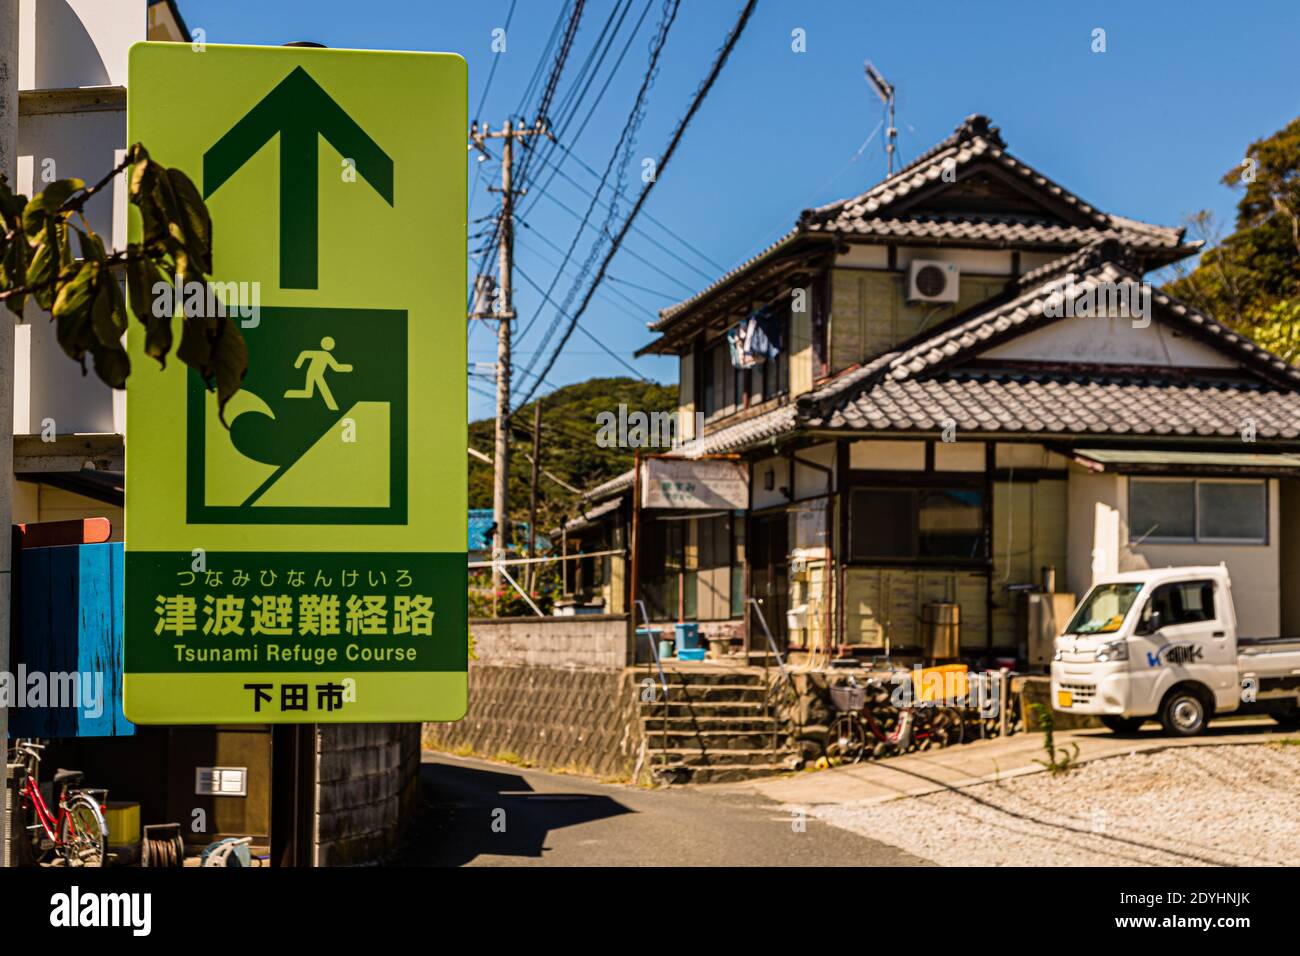 Tsunami Warning Signs near Shimoda on Japanese Coastline Stock Photo